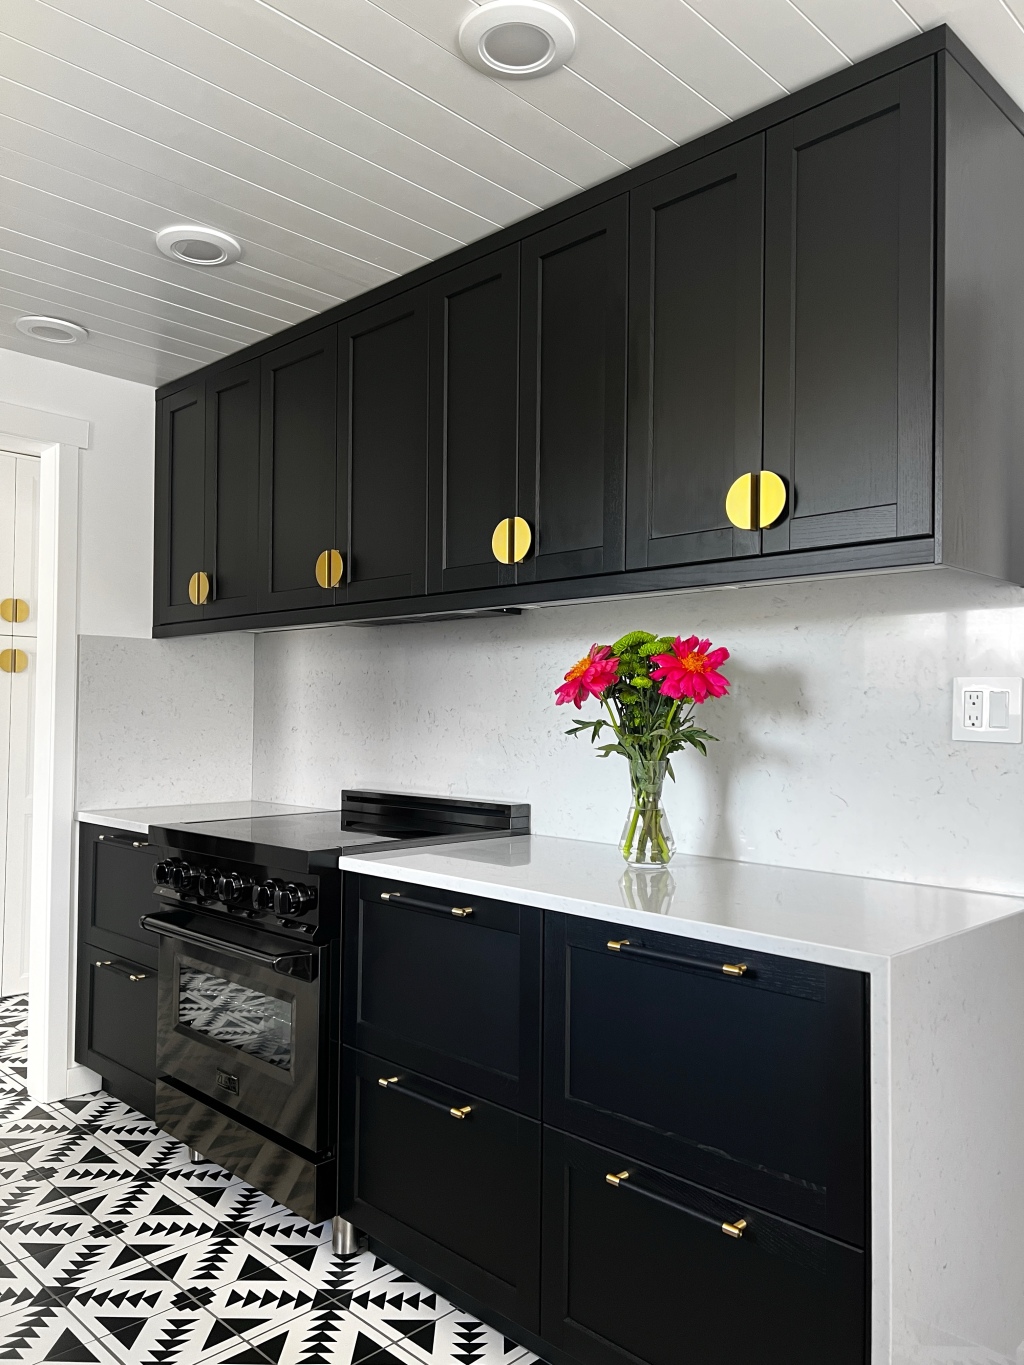 Kitchen Remodel Reveal! IKEA Cabinets + Black & White Geometric Tile Floors